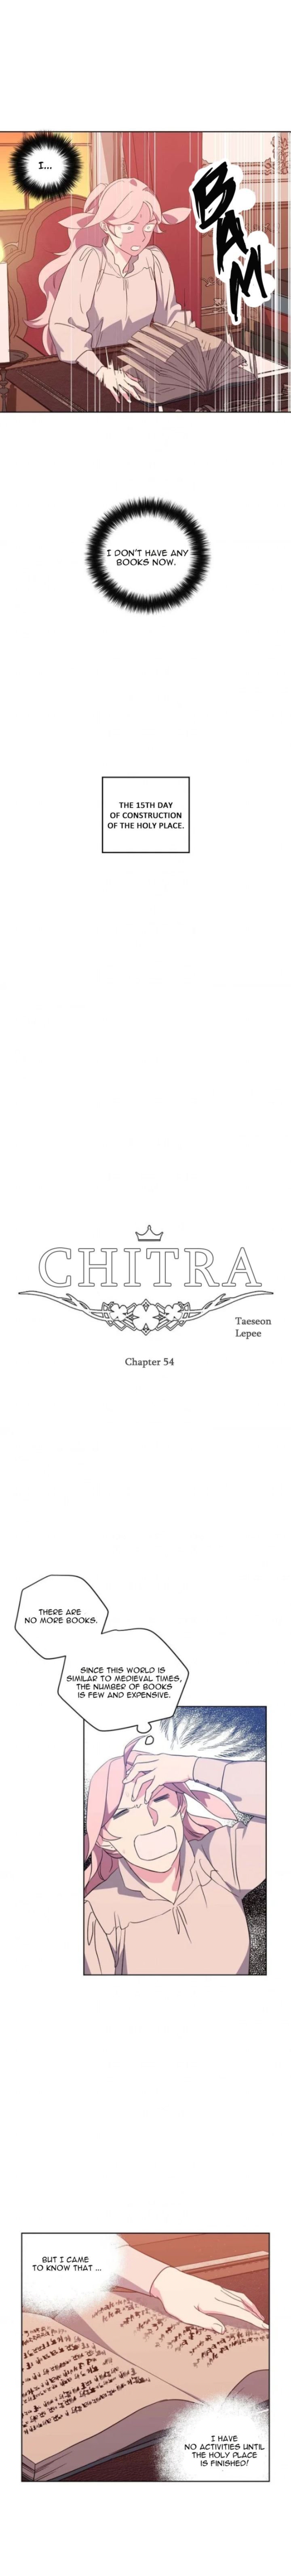 Chitra 54 2